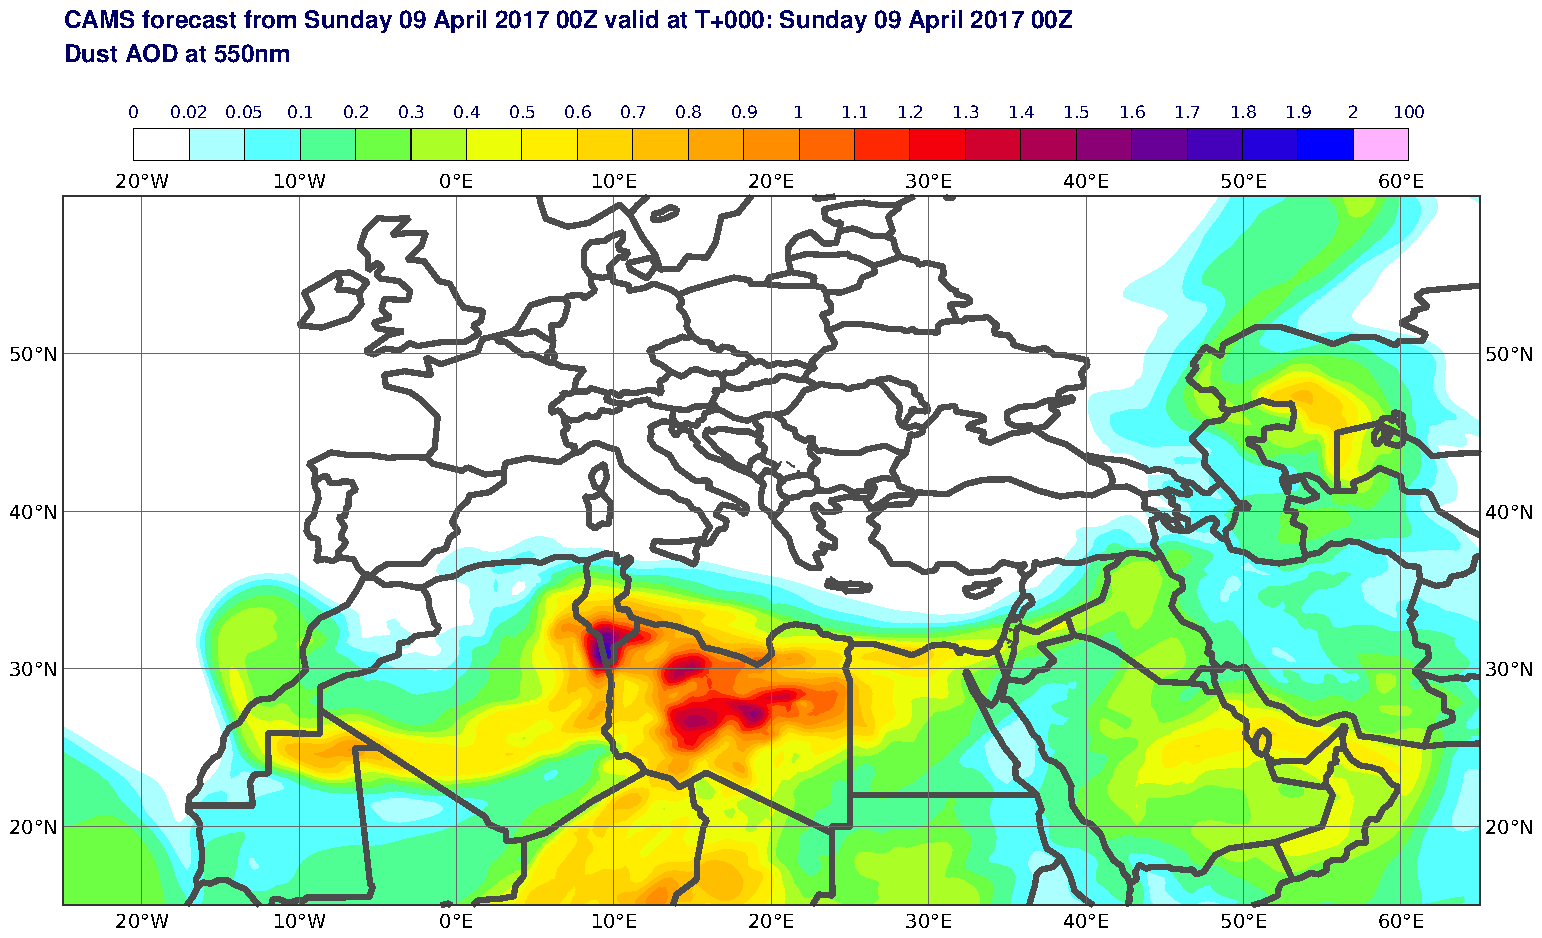 Dust AOD at 550nm valid at T0 - 2017-04-09 00:00